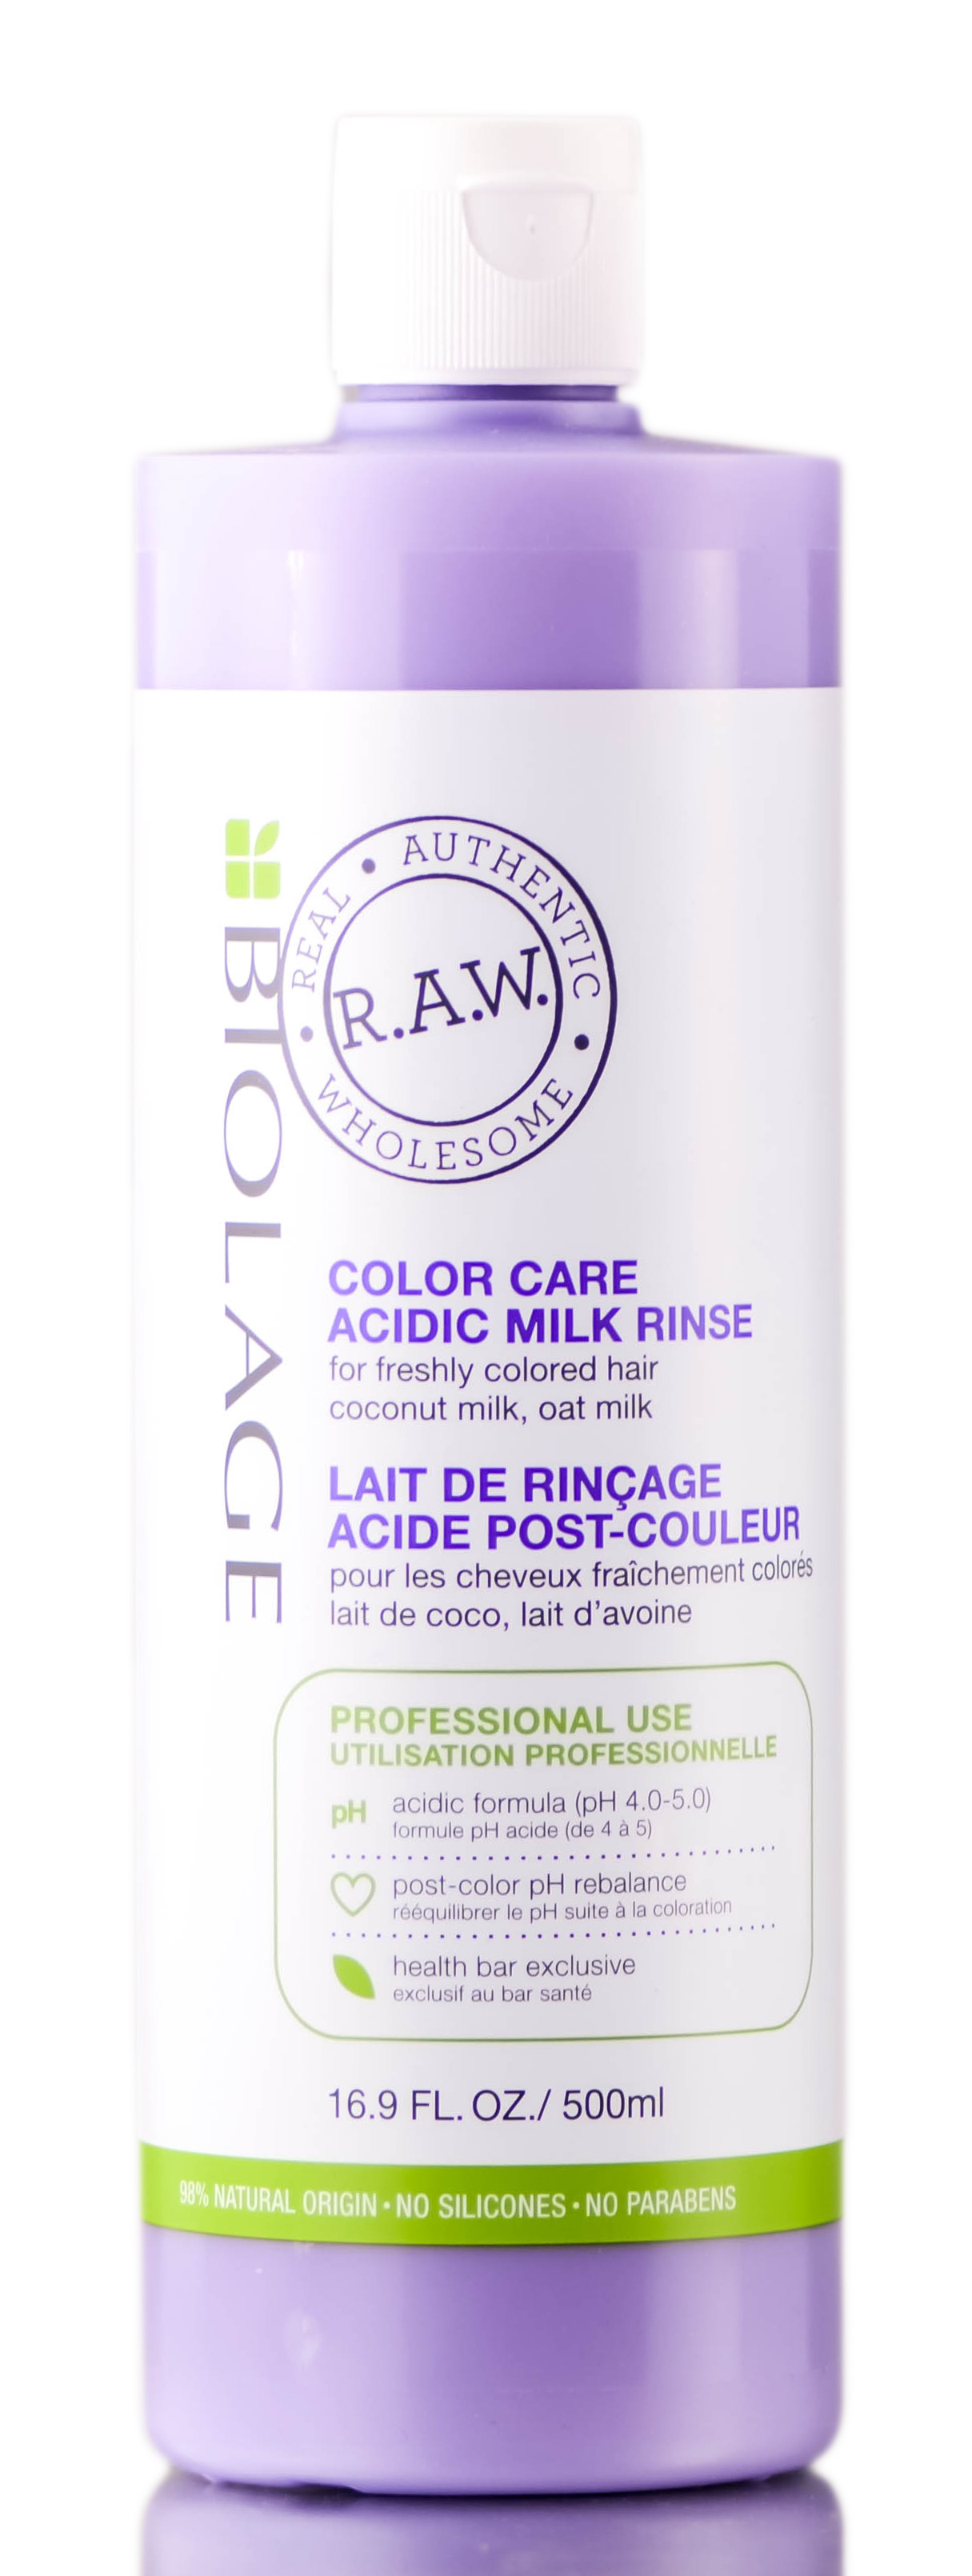 Biolage Color Care Acidic Conditioner Rinse - 16.9 oz - image 1 of 1